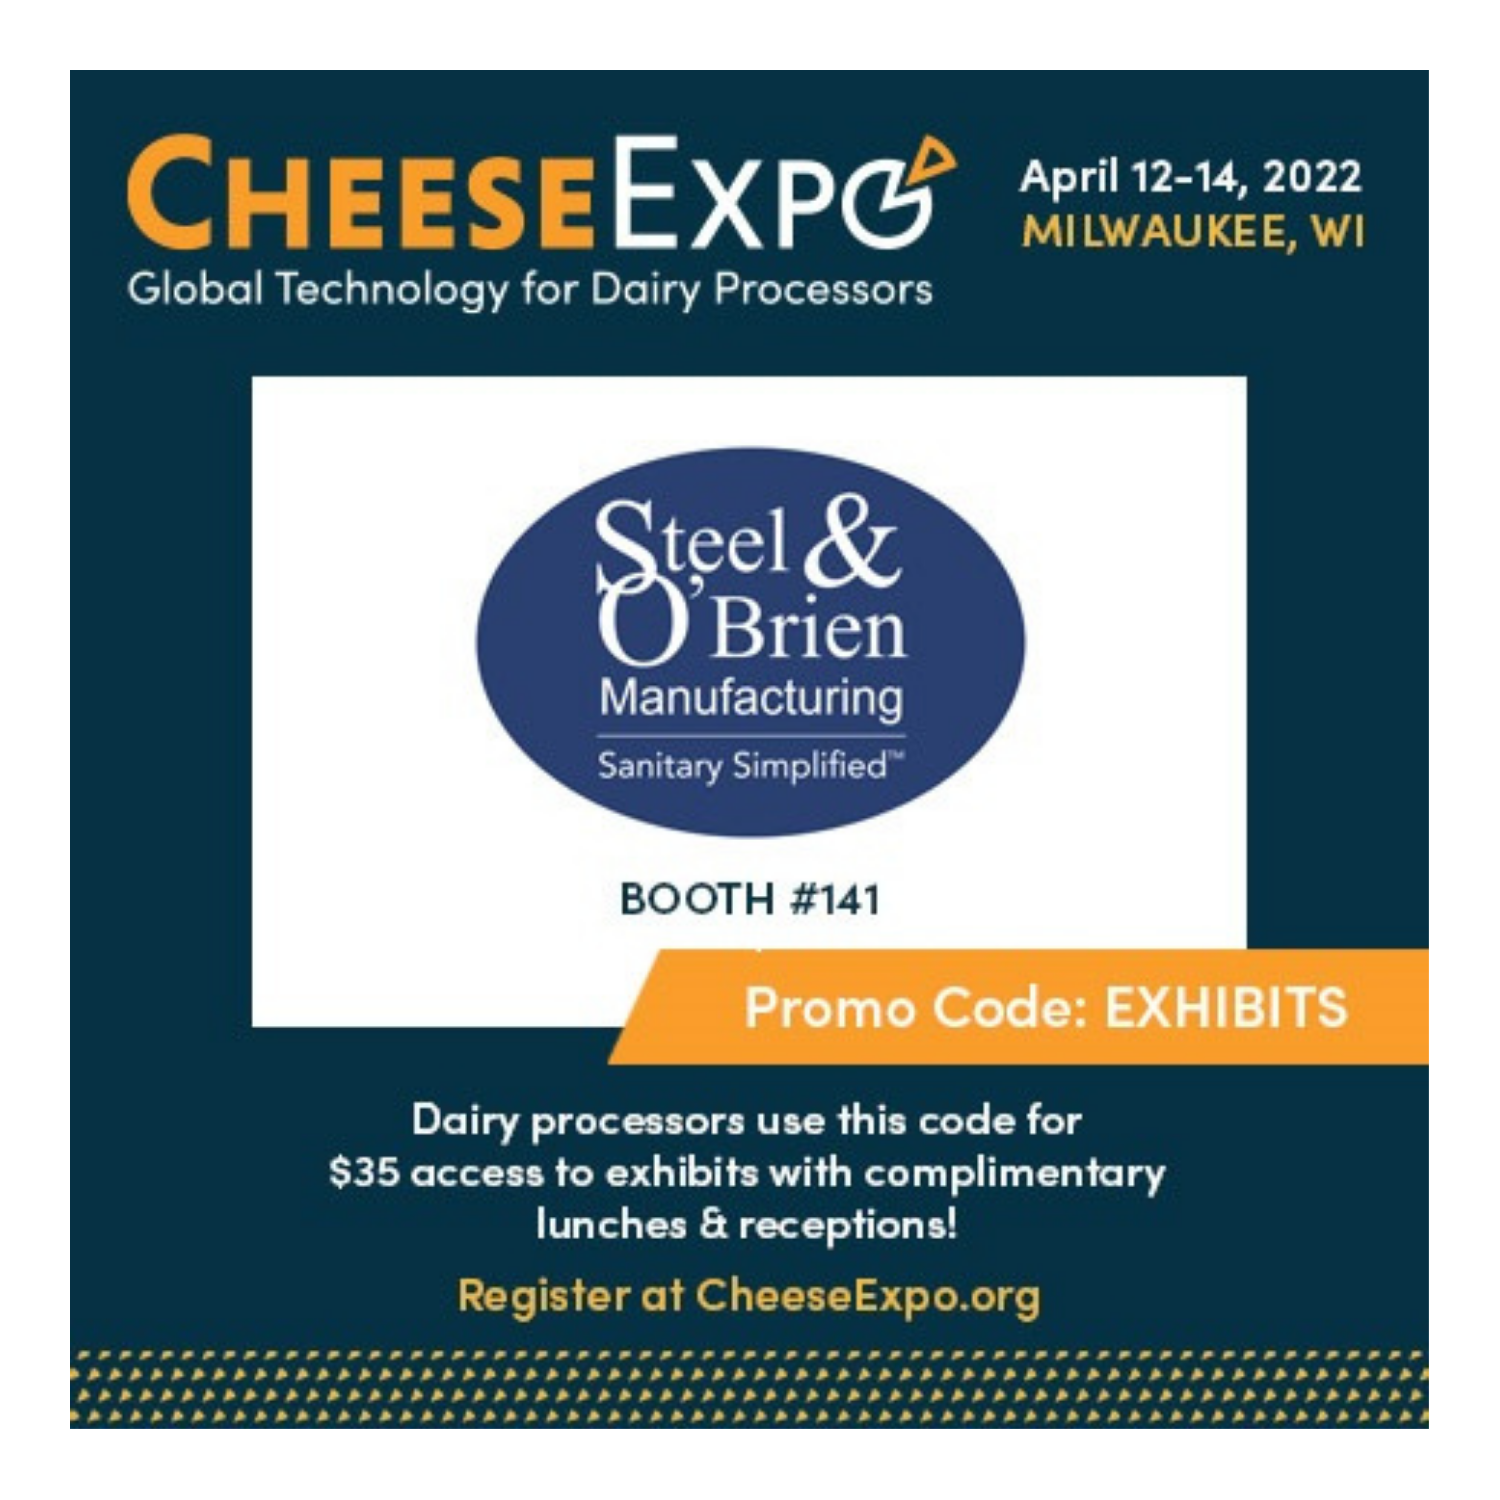 Cheese Expo 2022